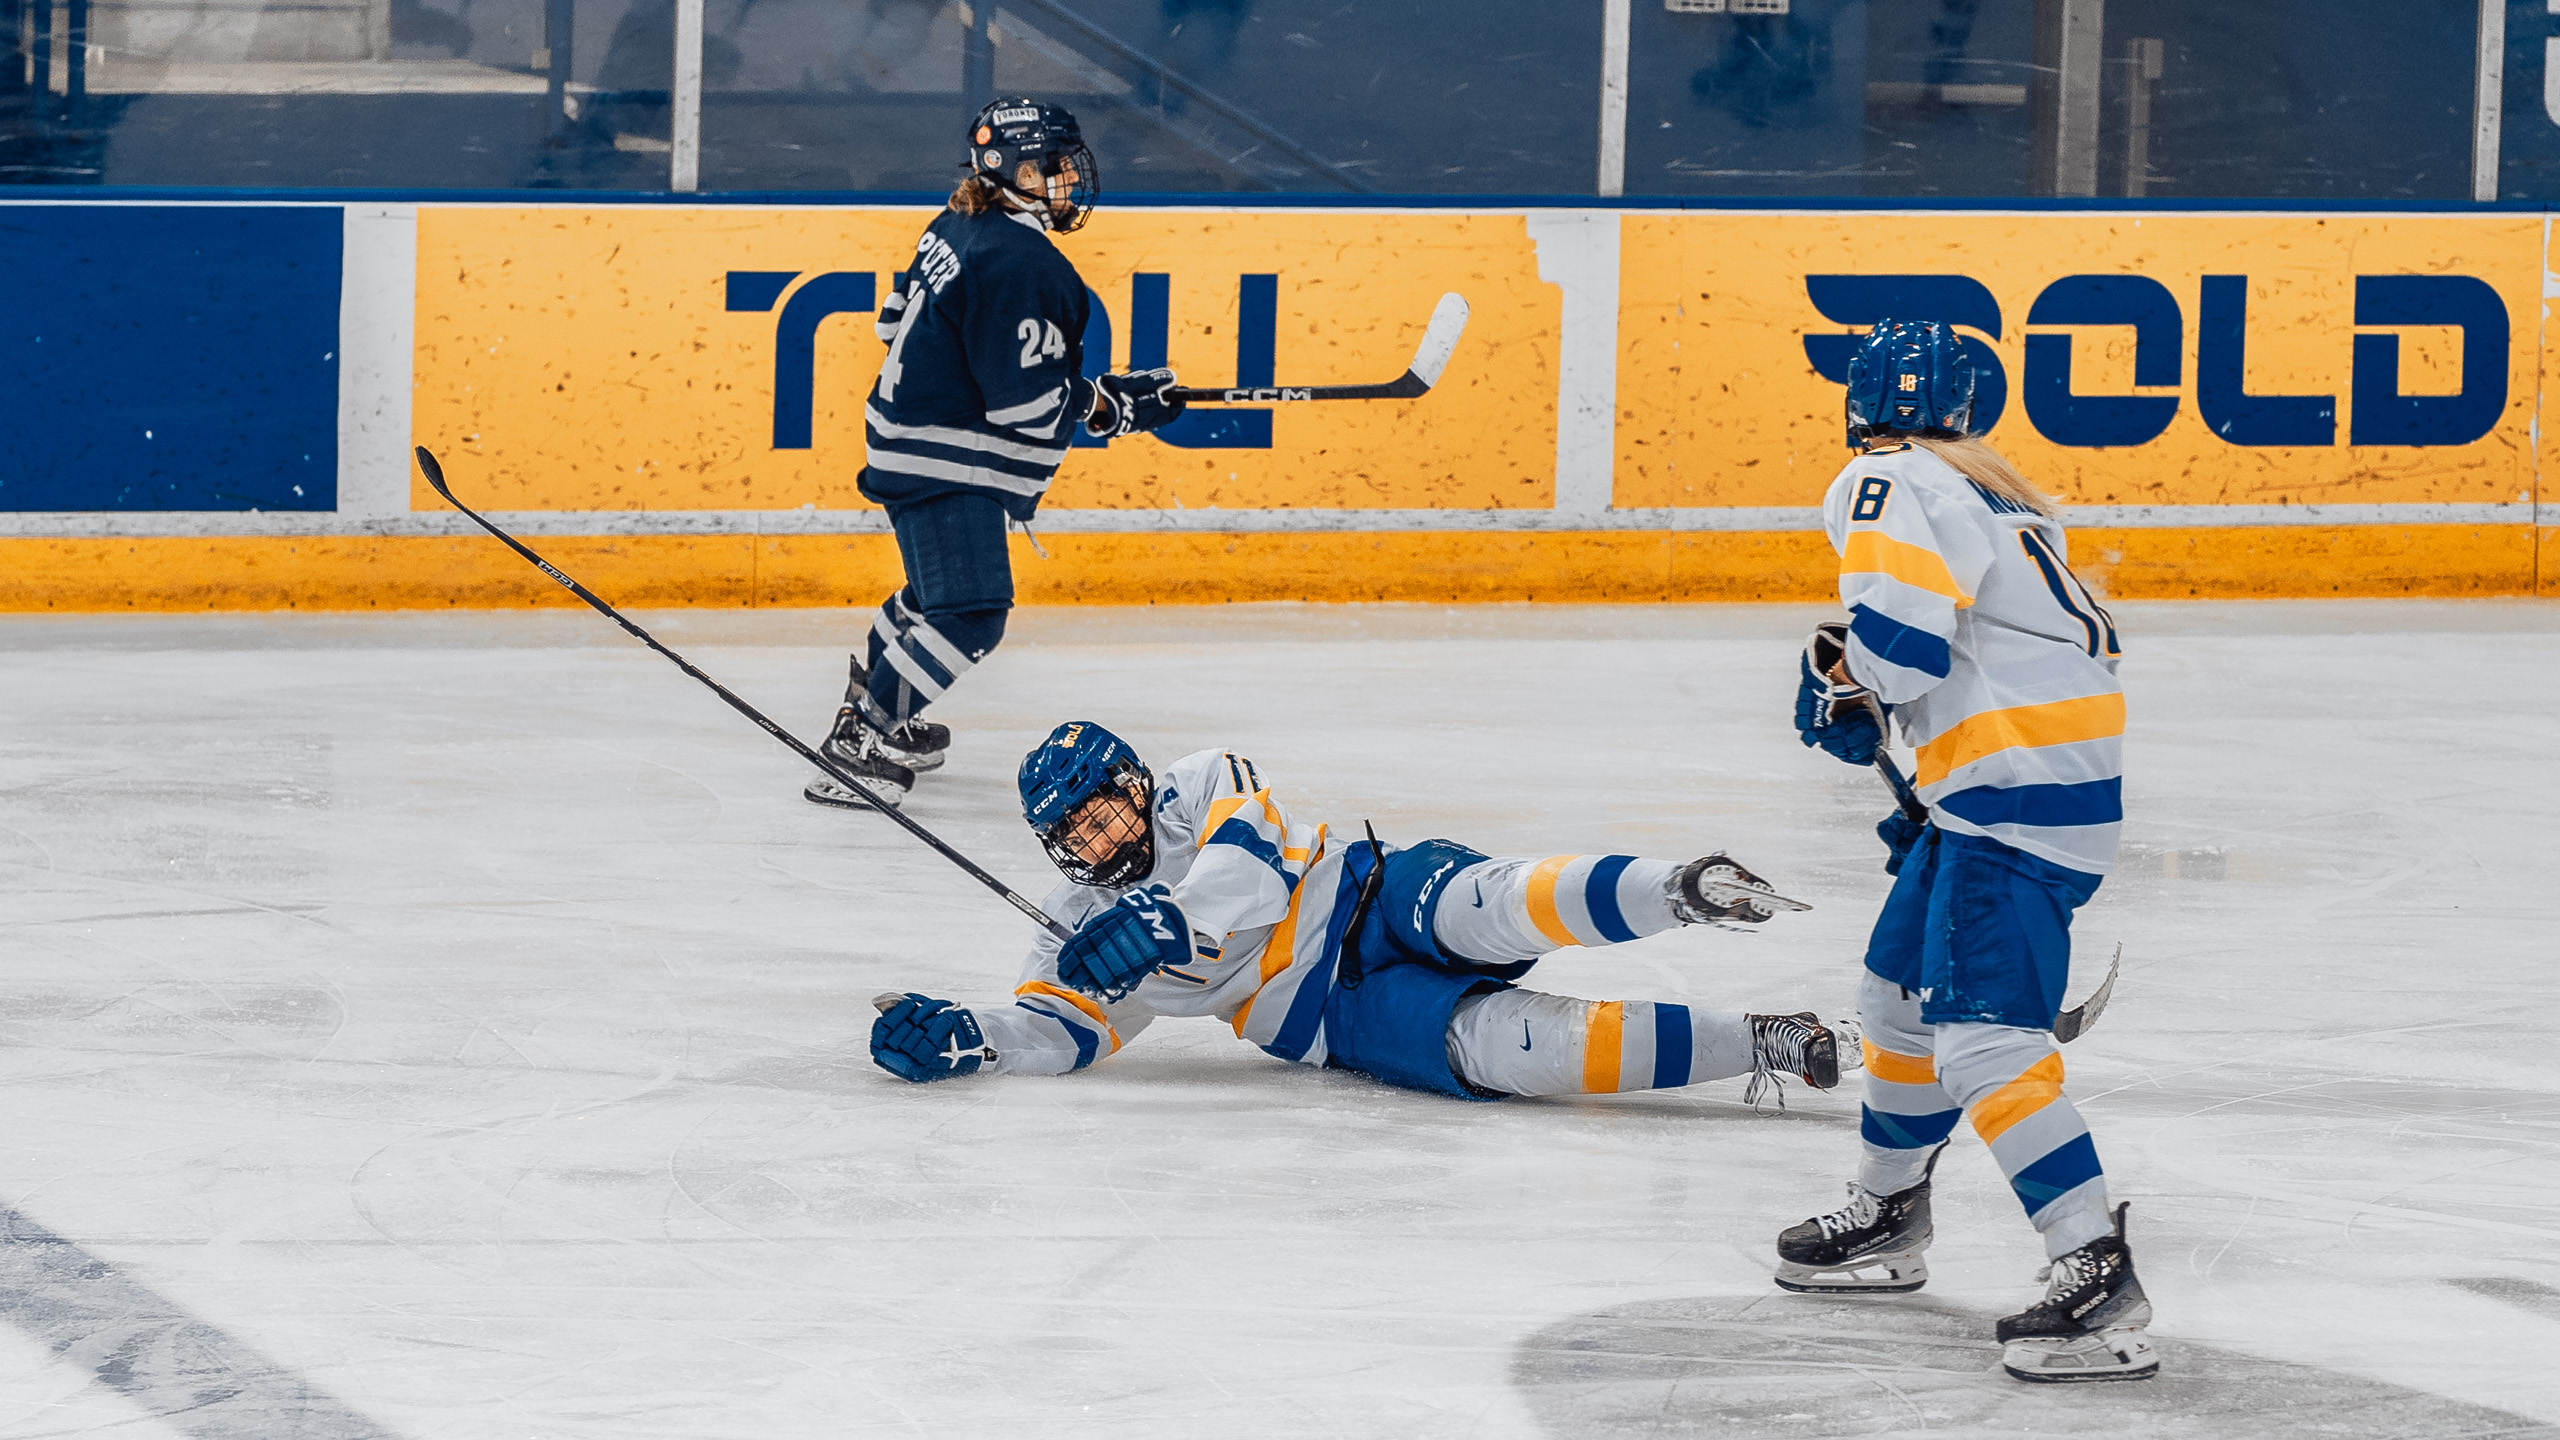 TMU women's hockey player Gaby Gareau falls on the ice